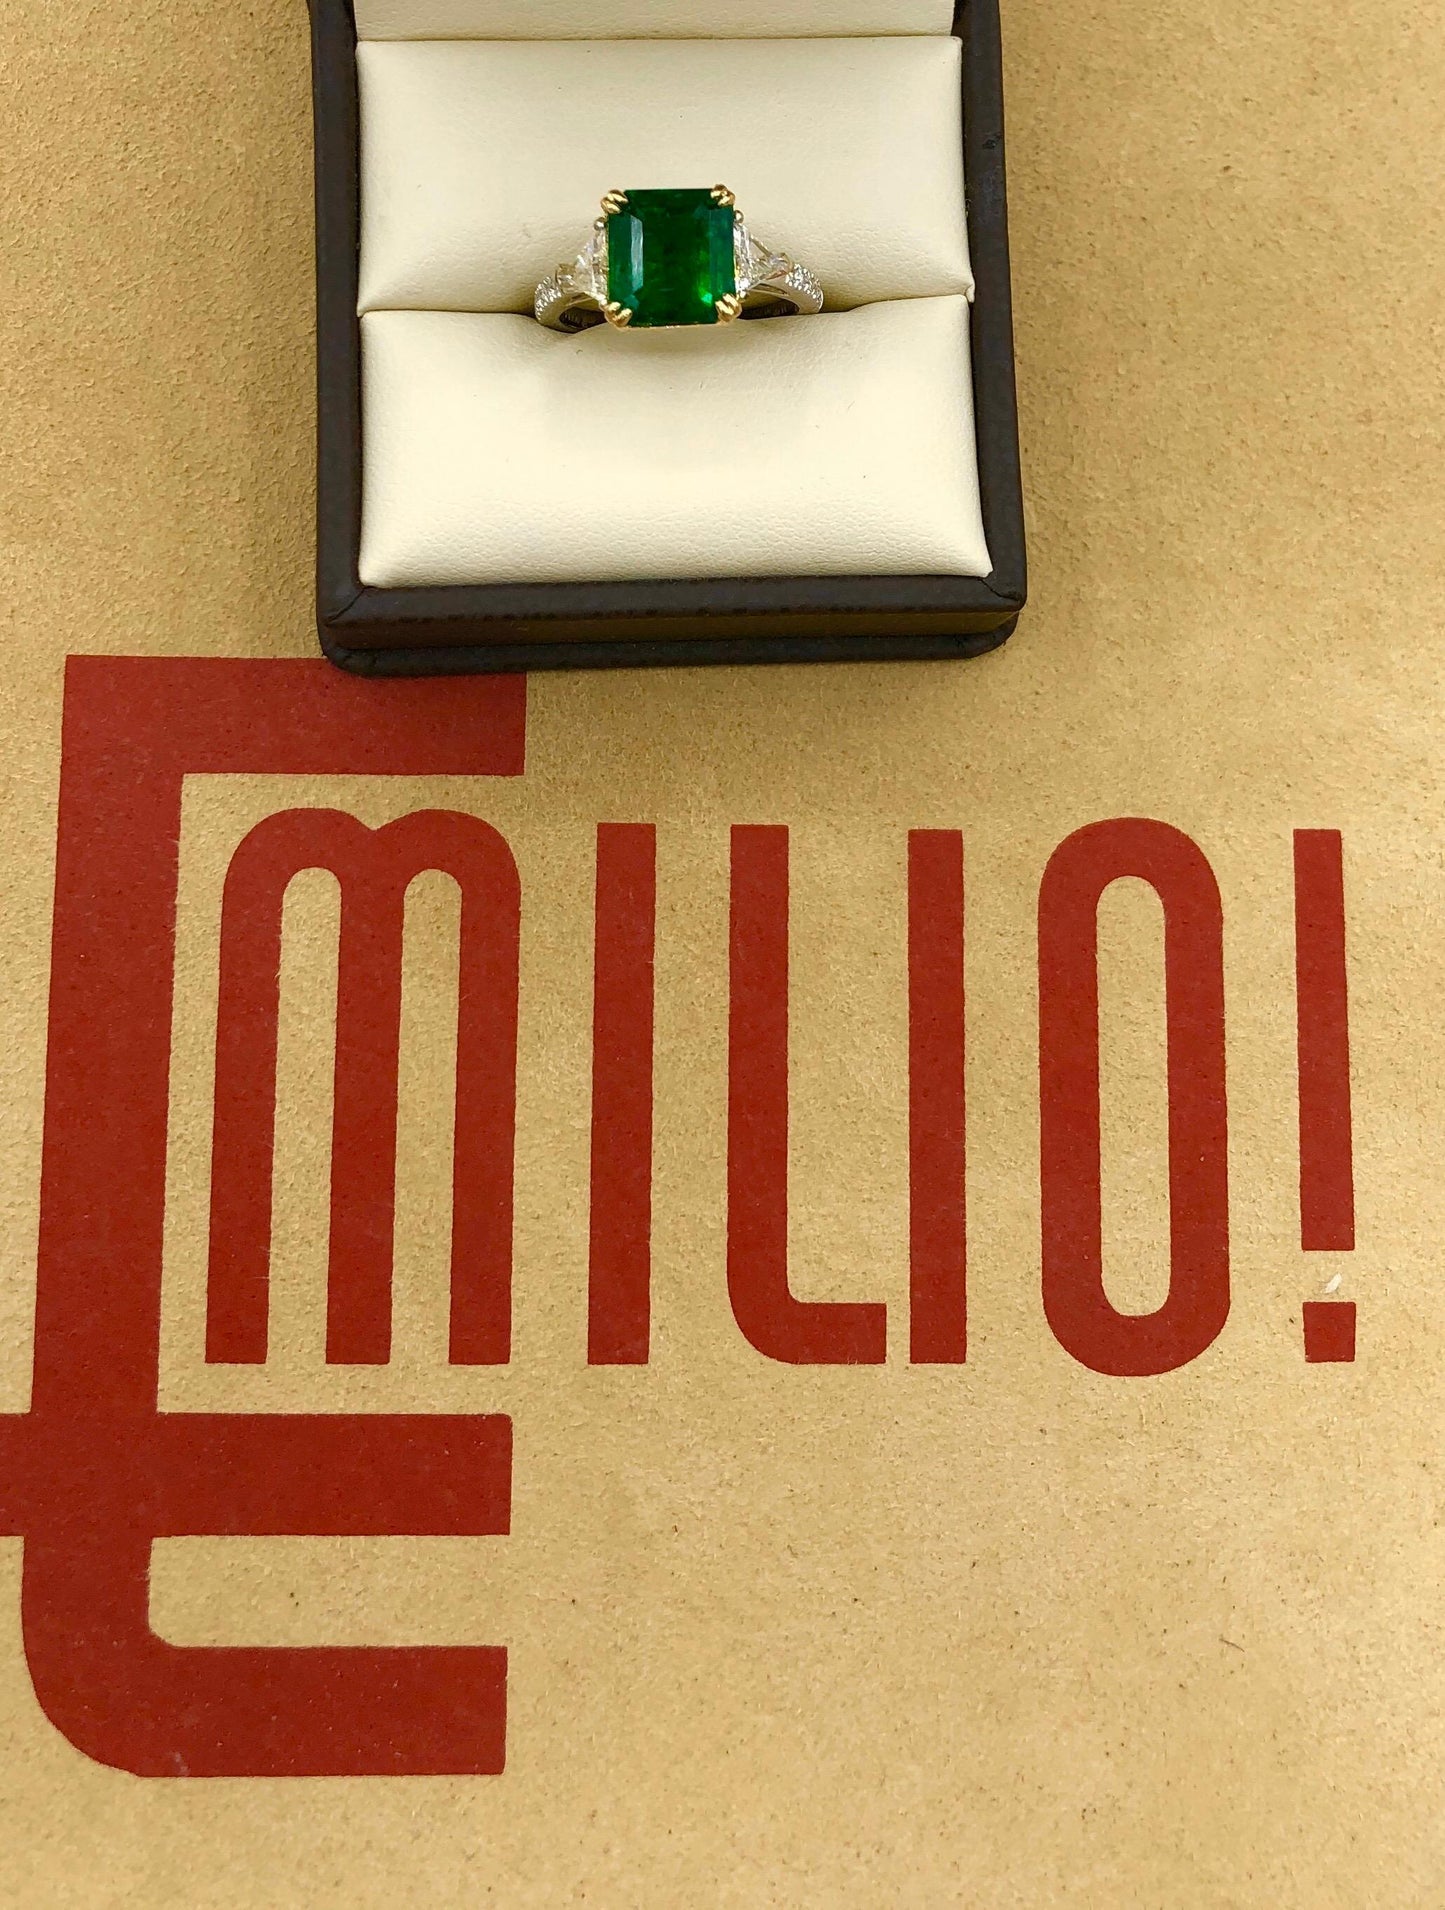 Emilio Jewelry 3.72 Carat Gia Certified Vivid Green Emerald Diamond Ring